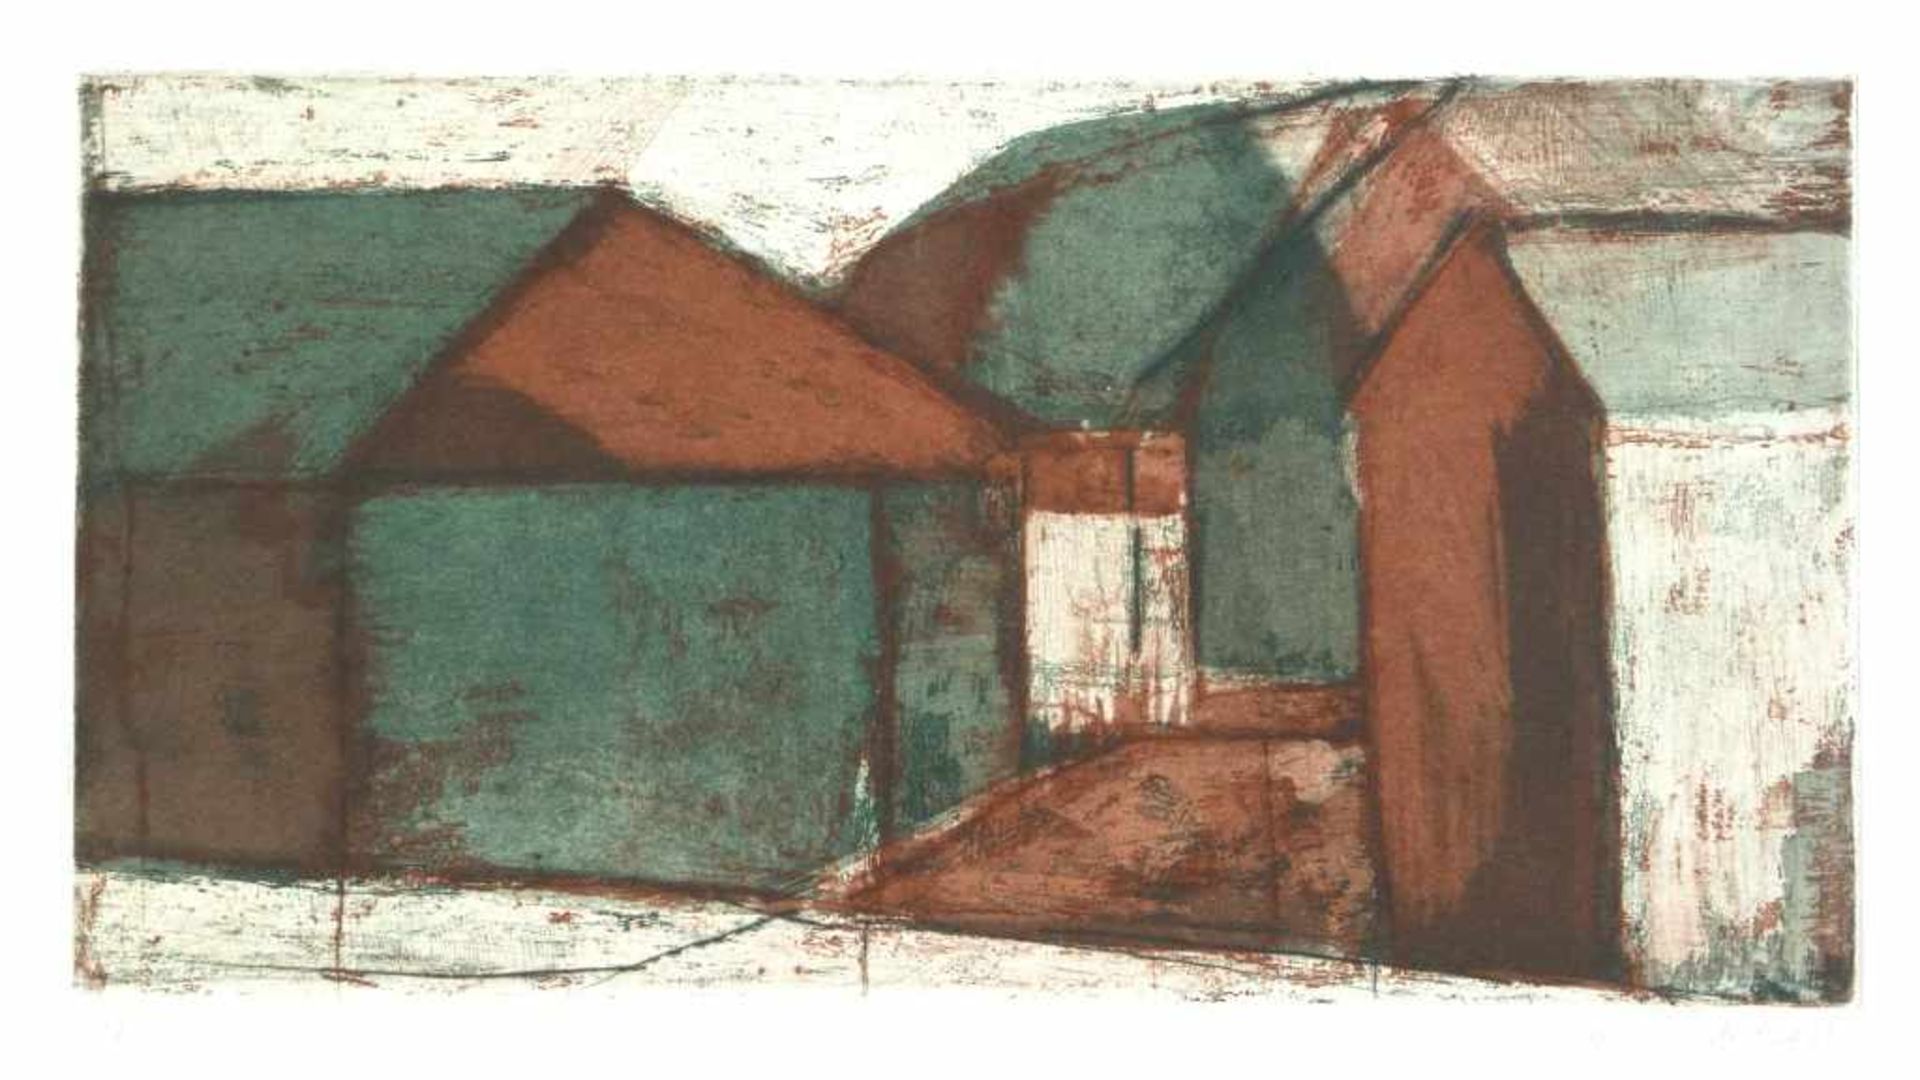 BÖTTCHER, JOACHIM: "Häuser", 1981Farbradierung auf Bütten16,6 x 31,6 26,5 x 39,2 cmsigniert, datiert